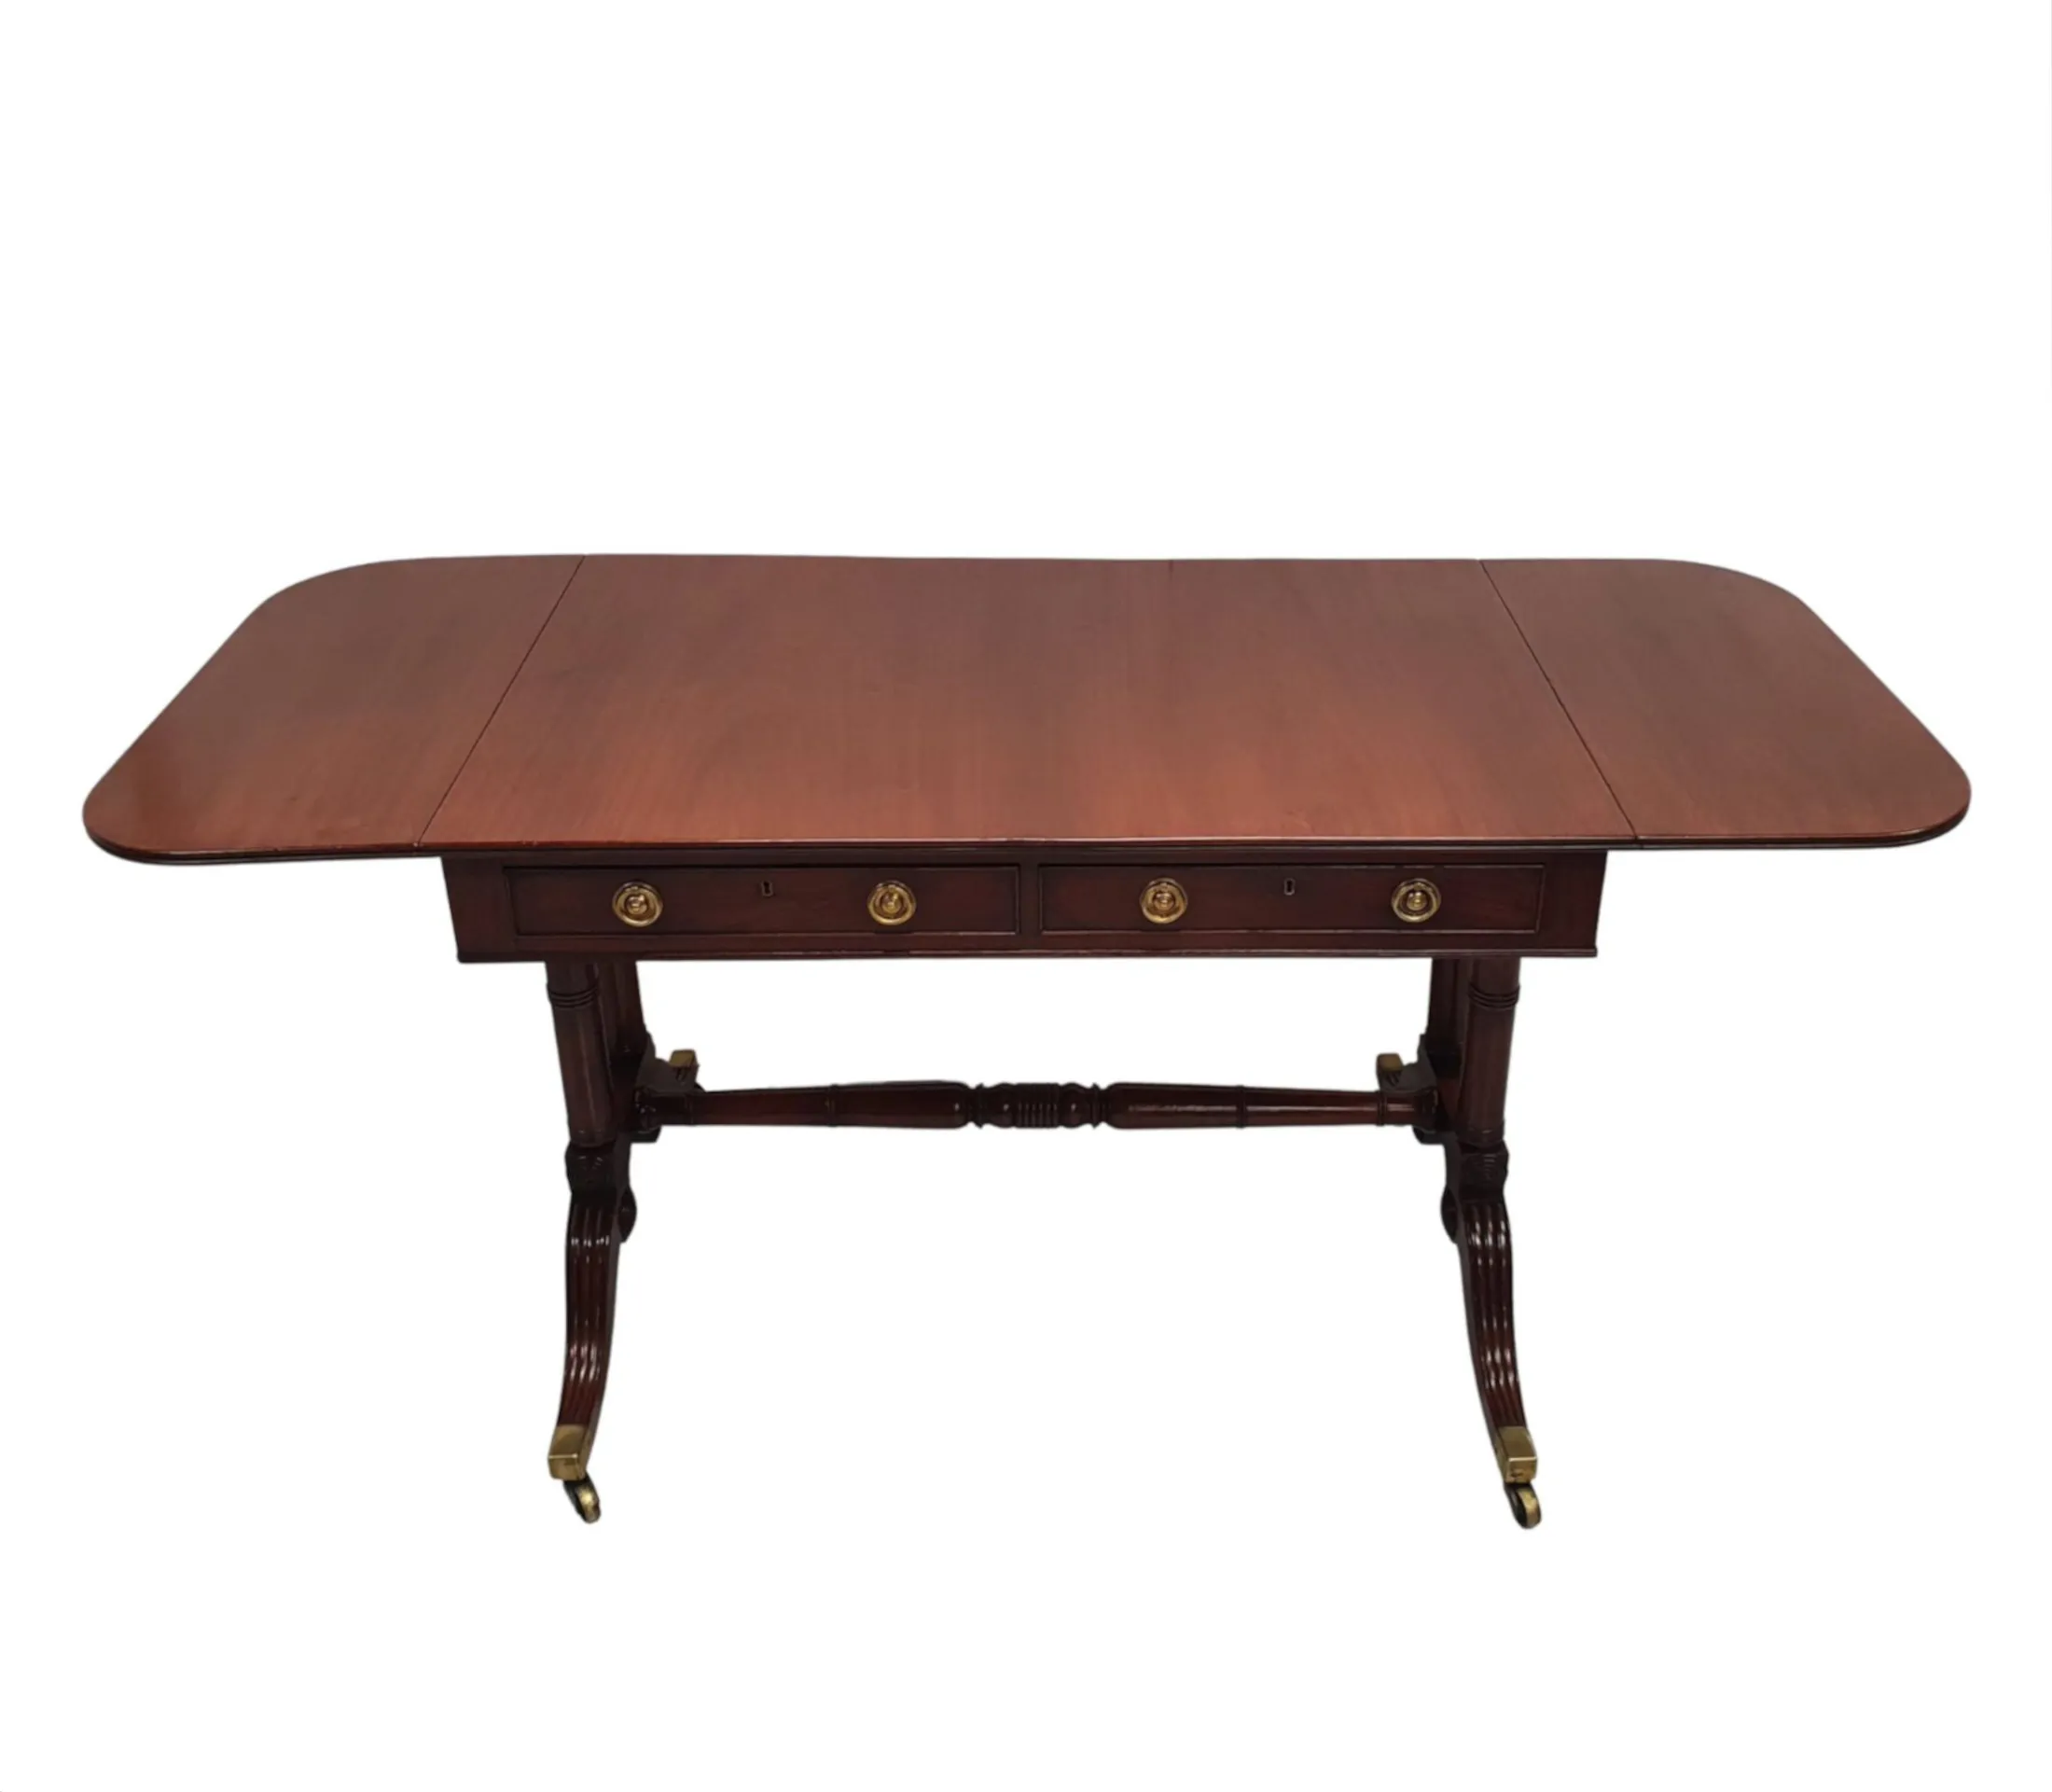 A Very Fine Early 19th Century Regency Sofa Table